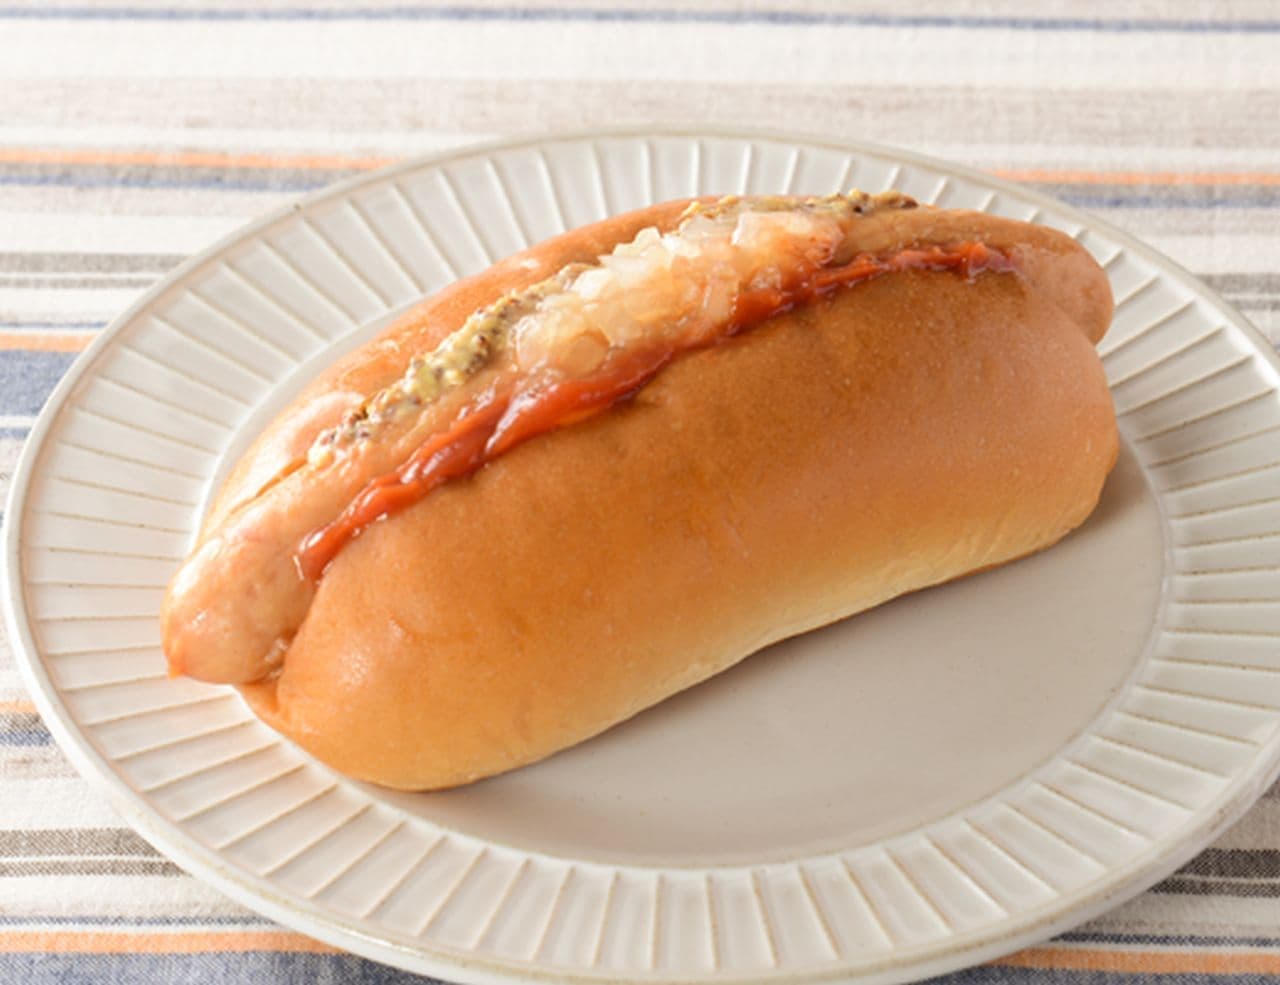 Lawson "Hot dog